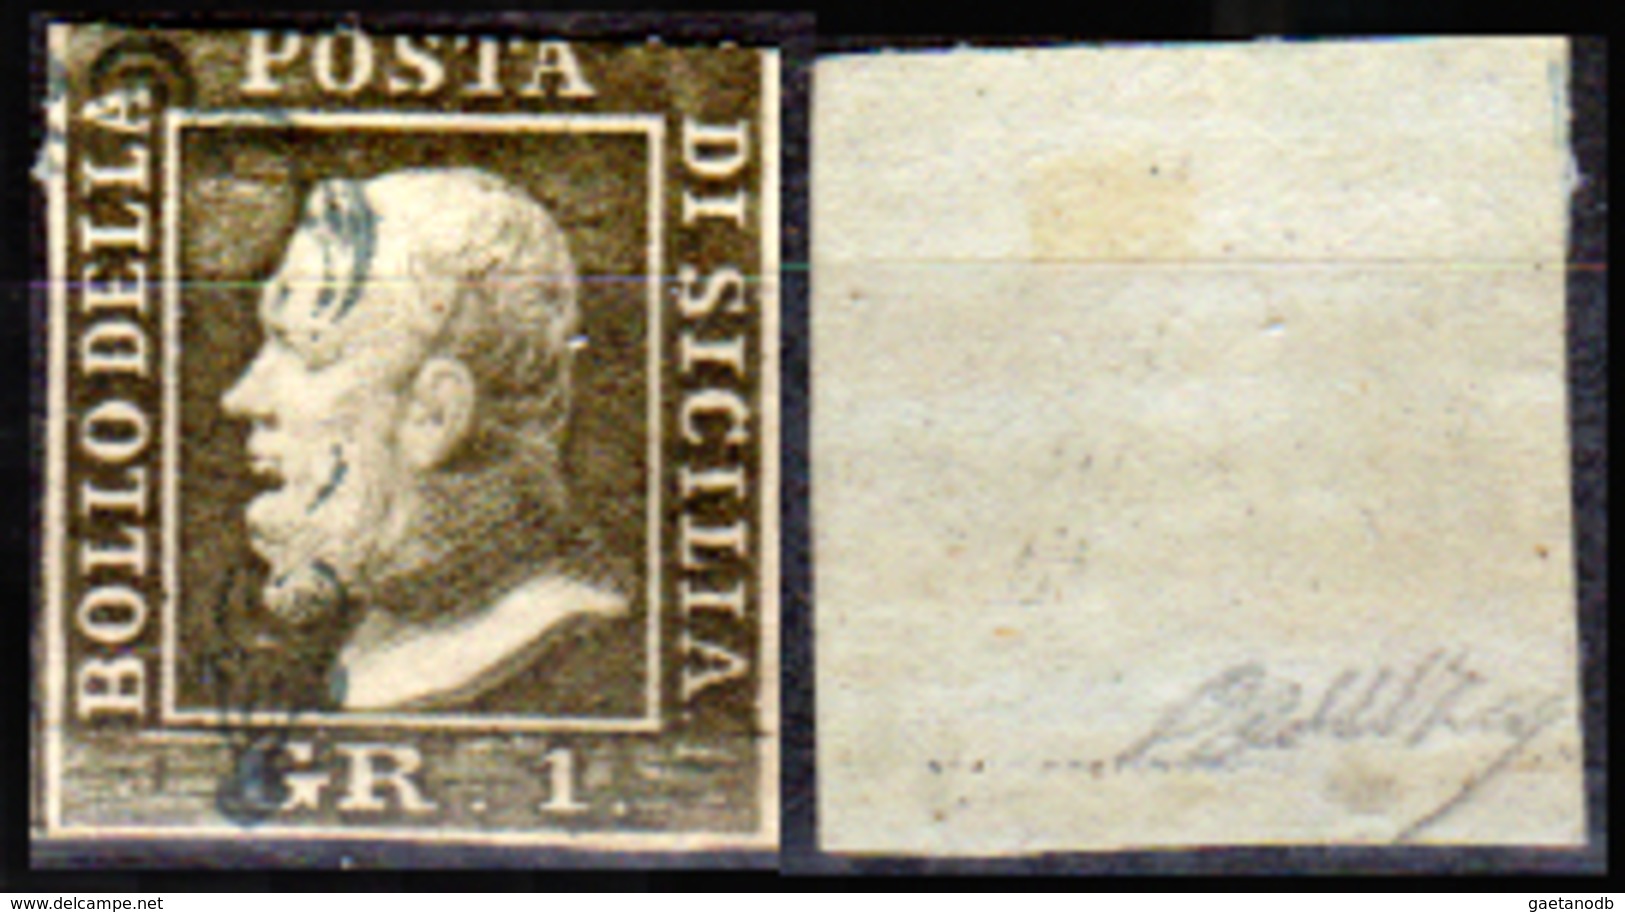 Sicilia-029 - Emissione 1859:  Sassone N. 4 (o) Used - Senza Difetti Occulti. - Sizilien